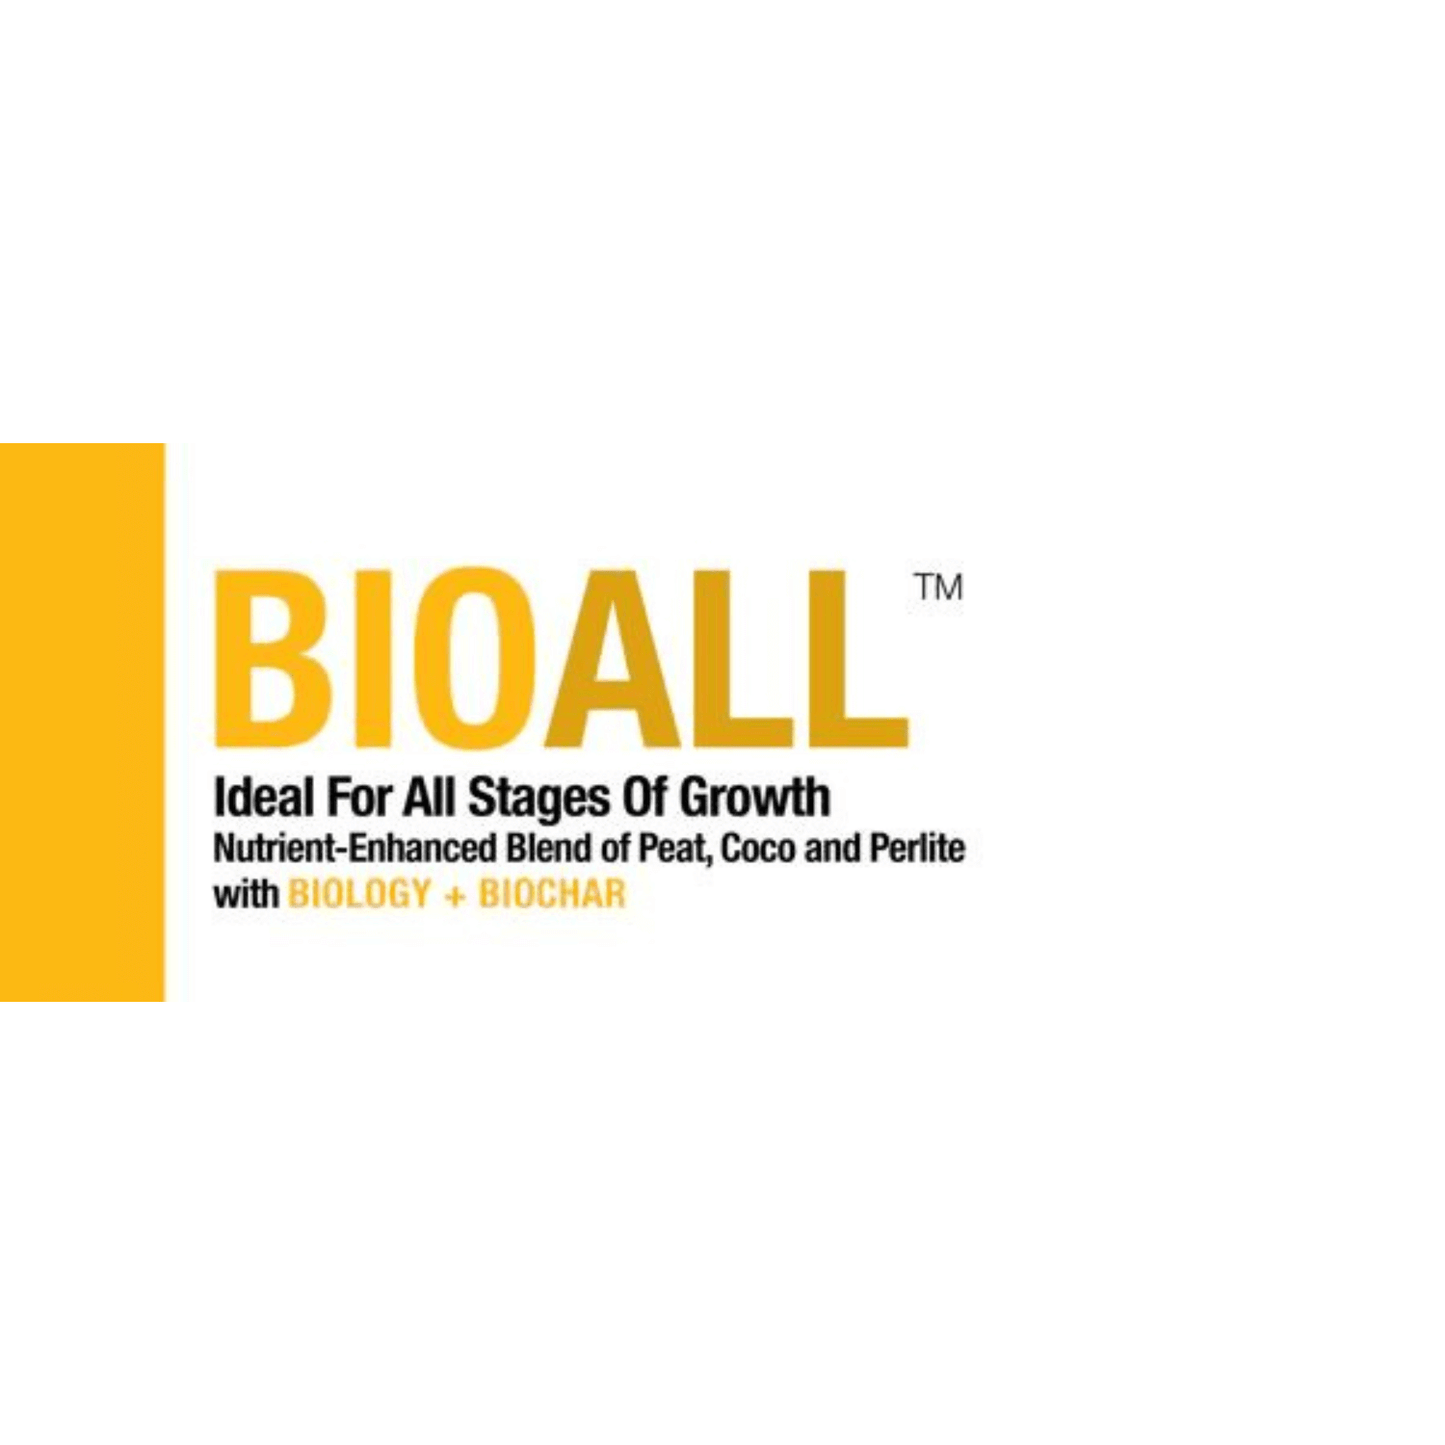 bio365 BIOALL 1.5cu ft Blend of Coir, Peat, and Perlite BA015001 Planting & Watering 850018264006